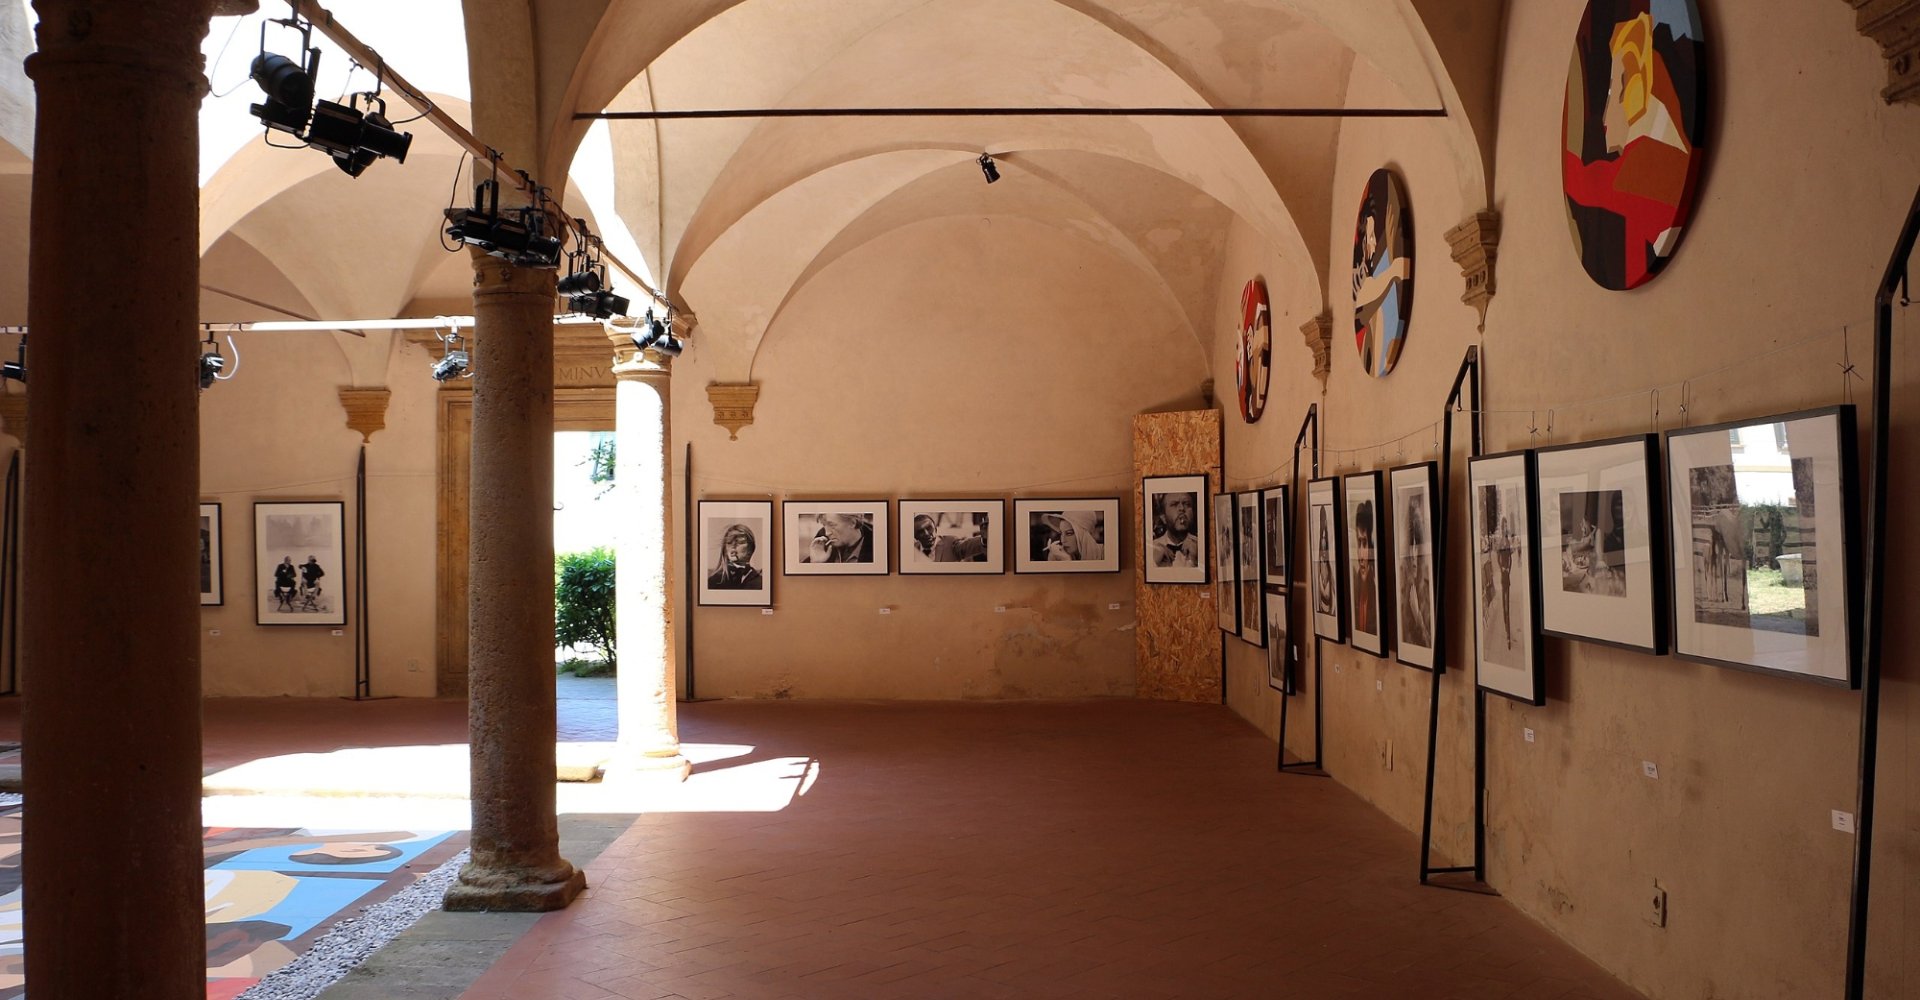 Pinacoteca Volterra